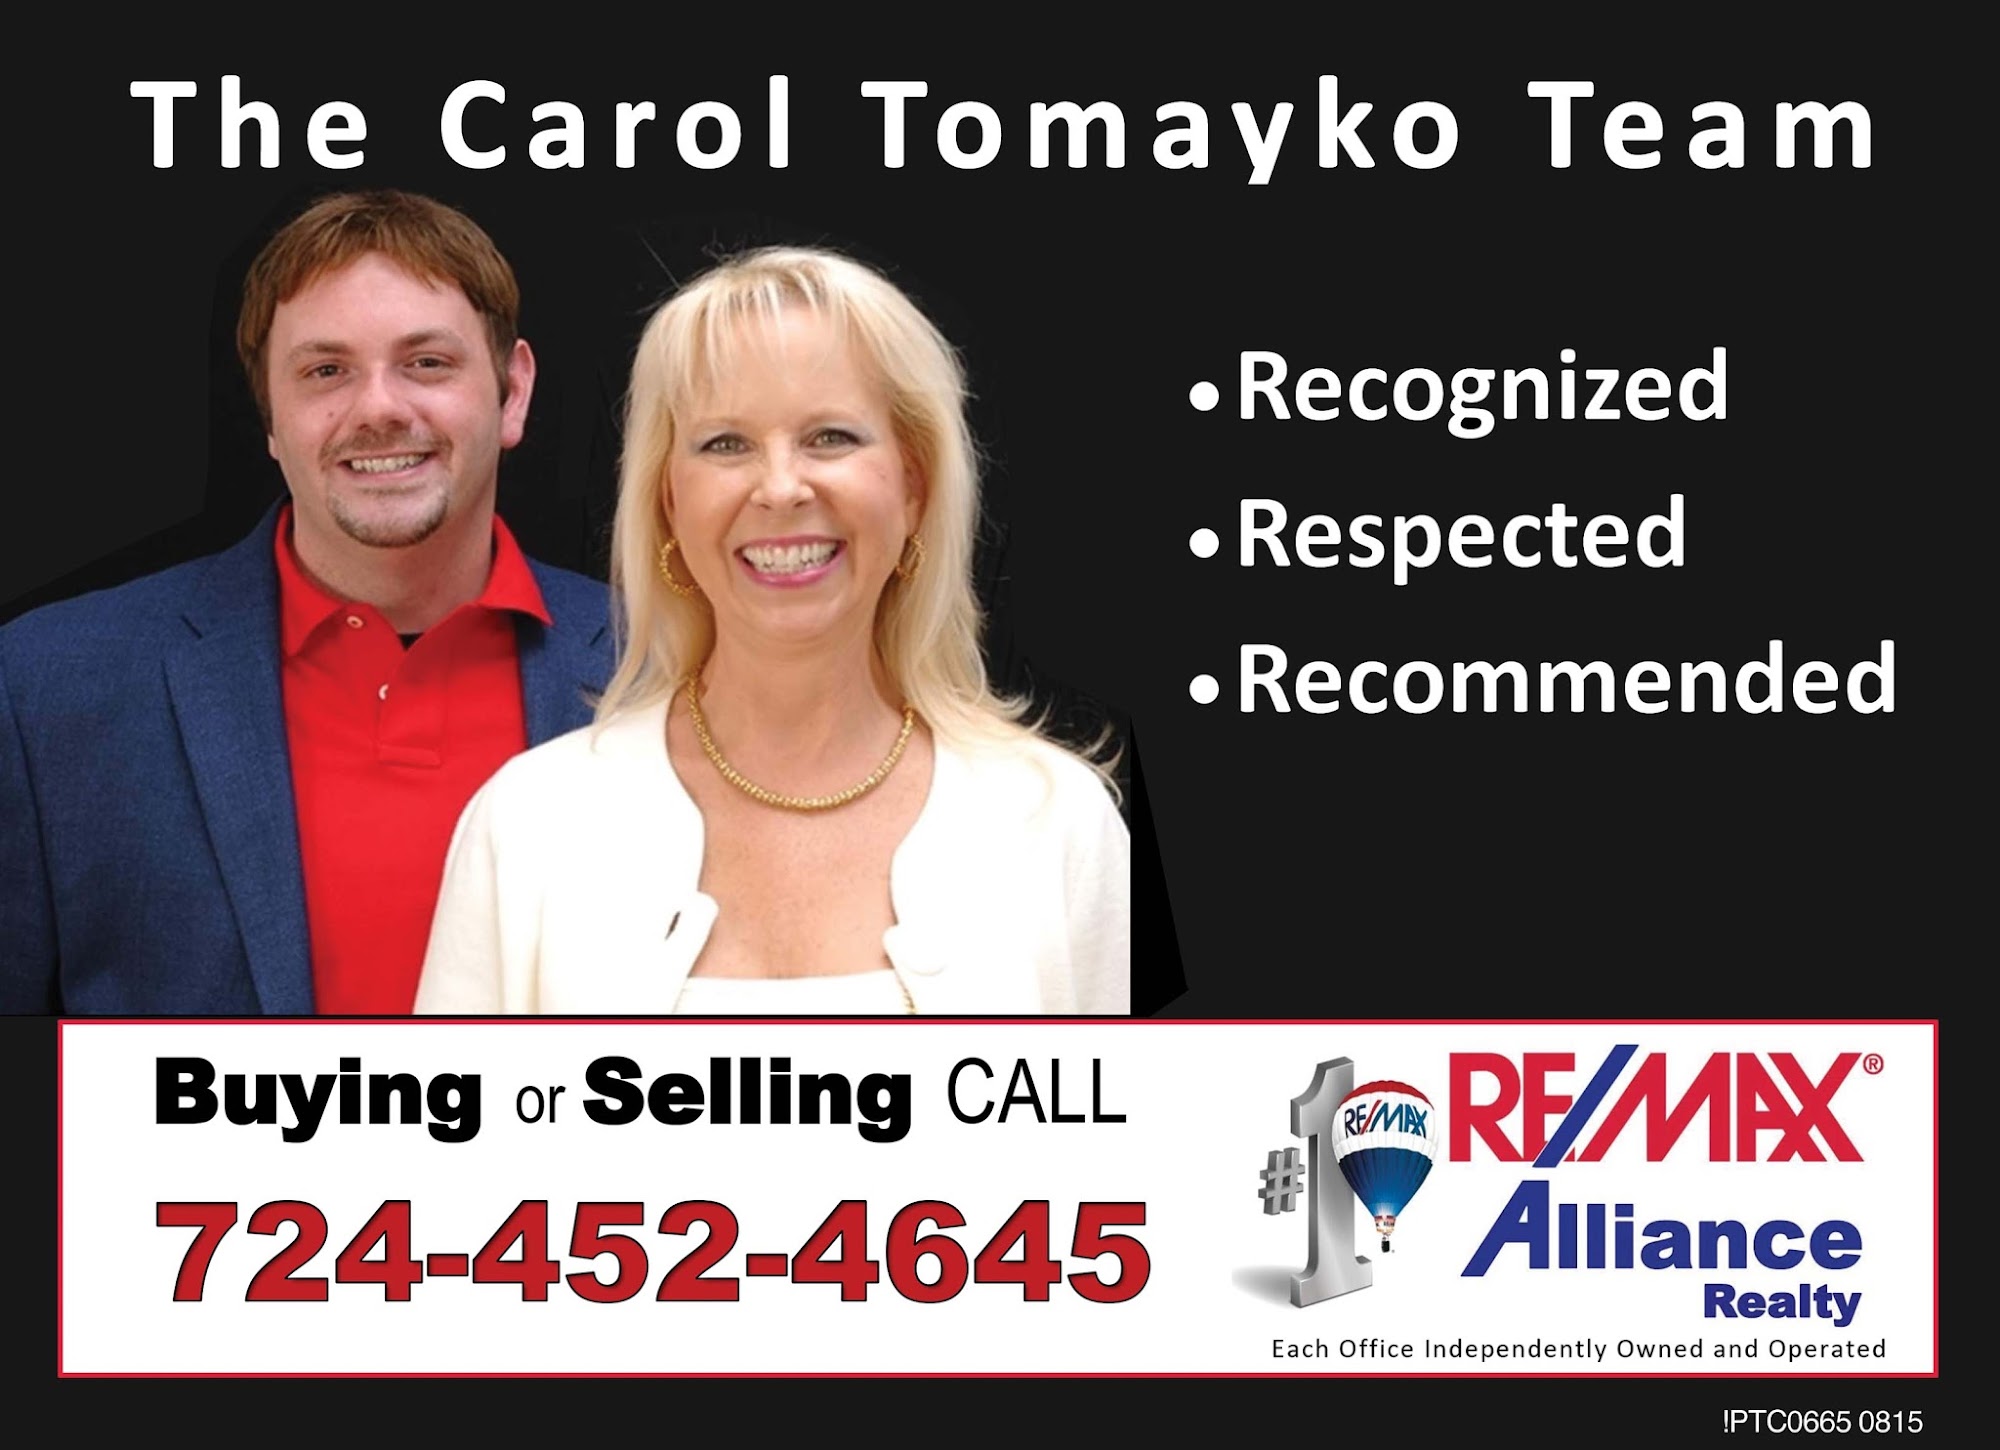 RE/MAX Alliance Realty: Carol Tomayko 22420 Perry Hwy, Zelienople Pennsylvania 16063